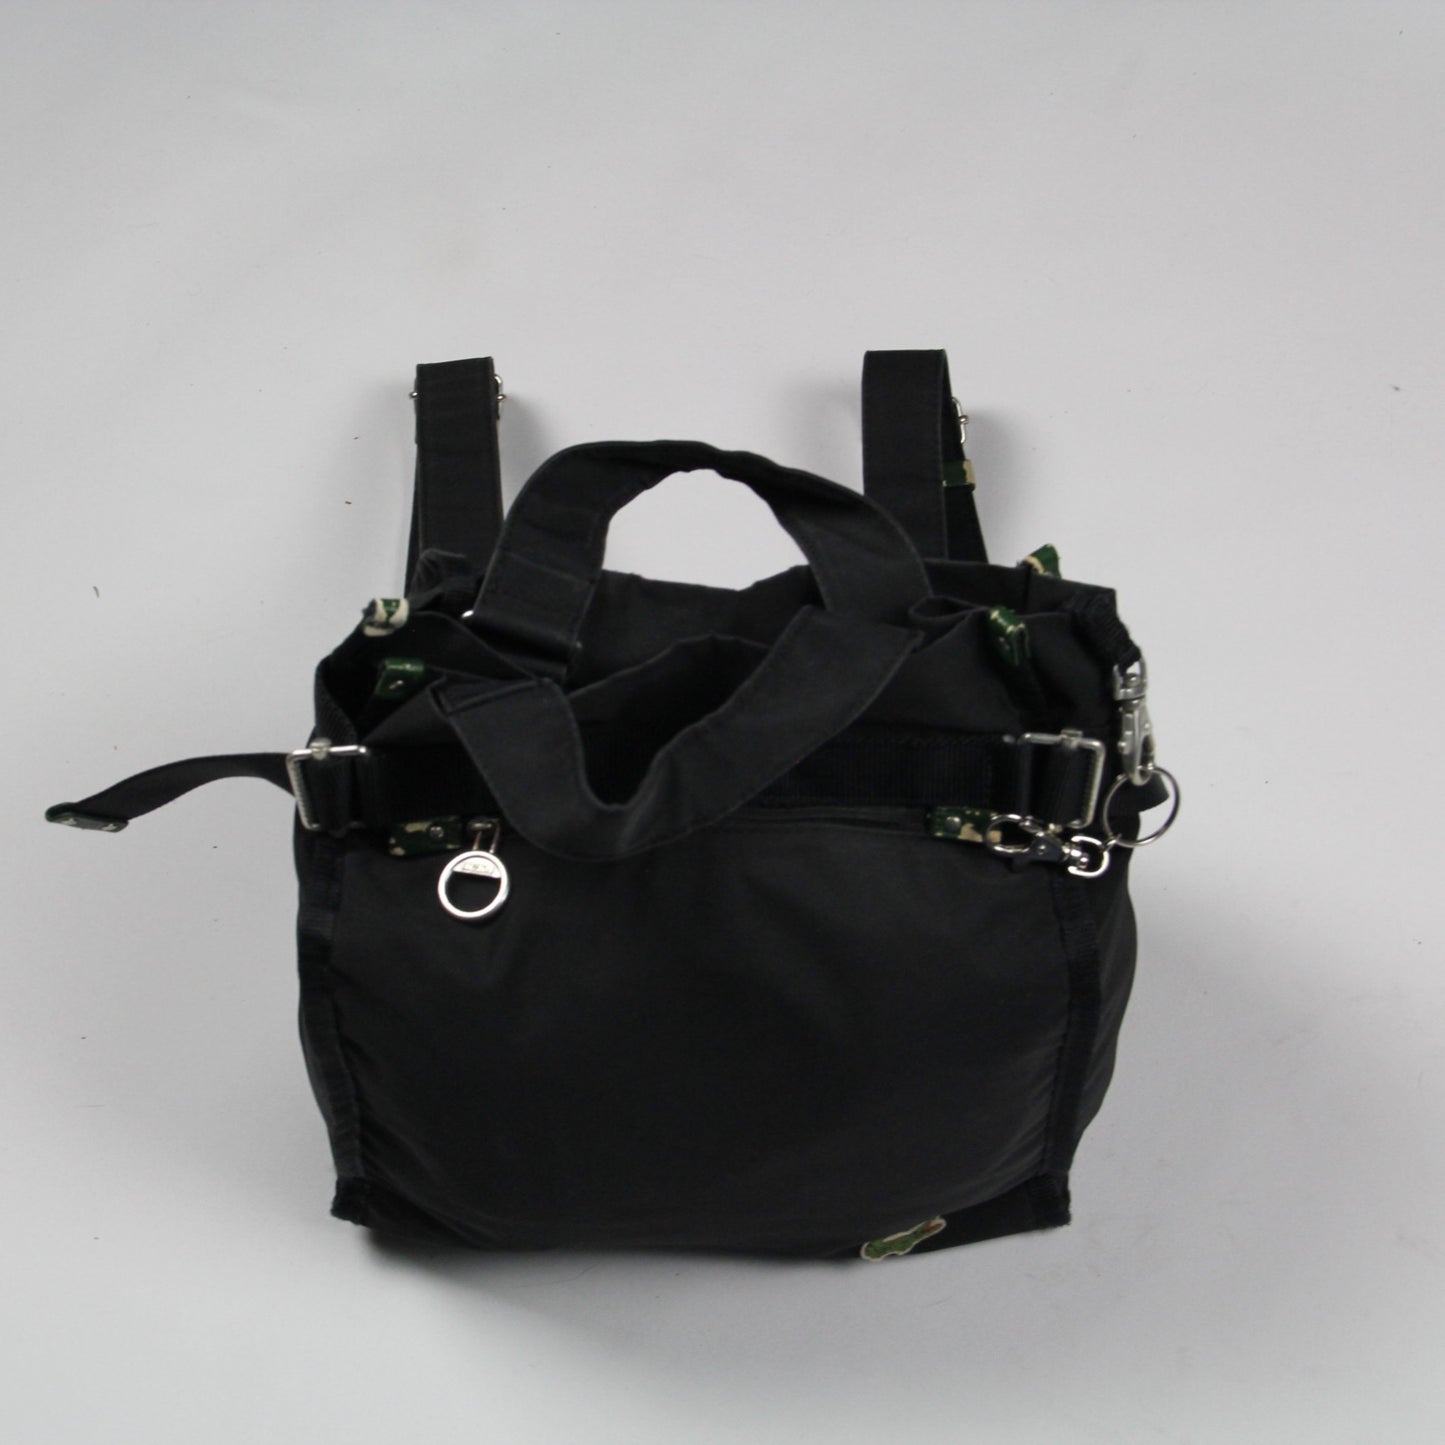 Lacoste Tennis "Backpack" Vintage black